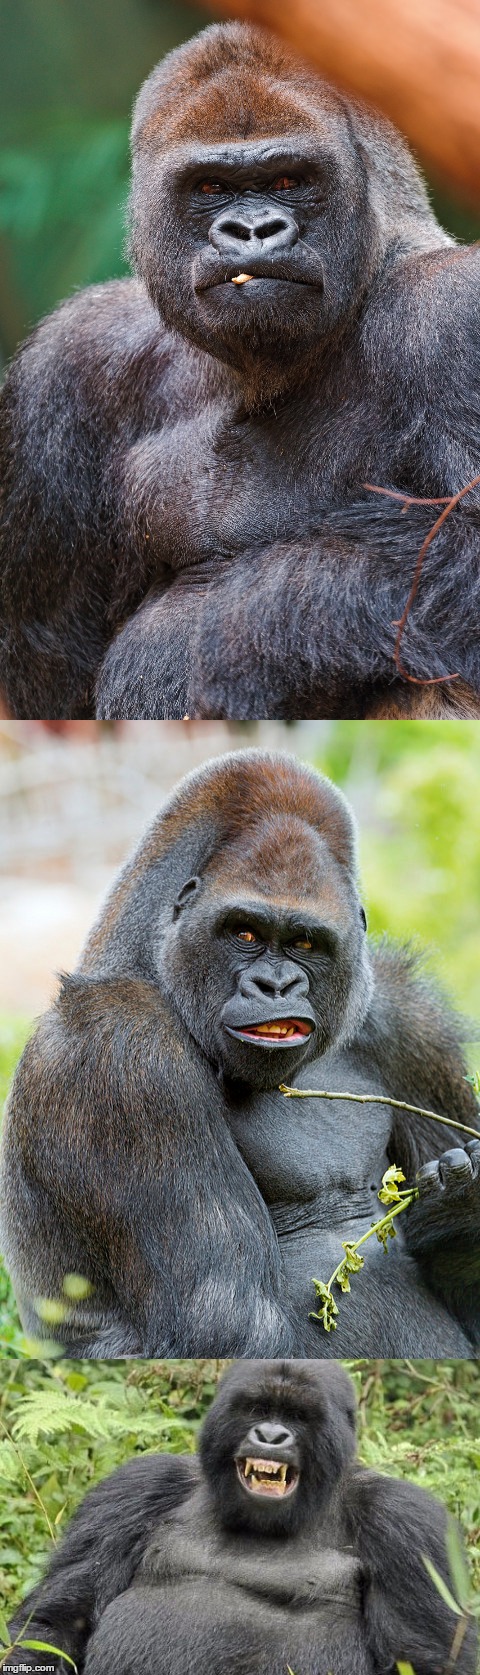 Bad Pun Gorilla | image tagged in lynch1979 | made w/ Imgflip meme maker